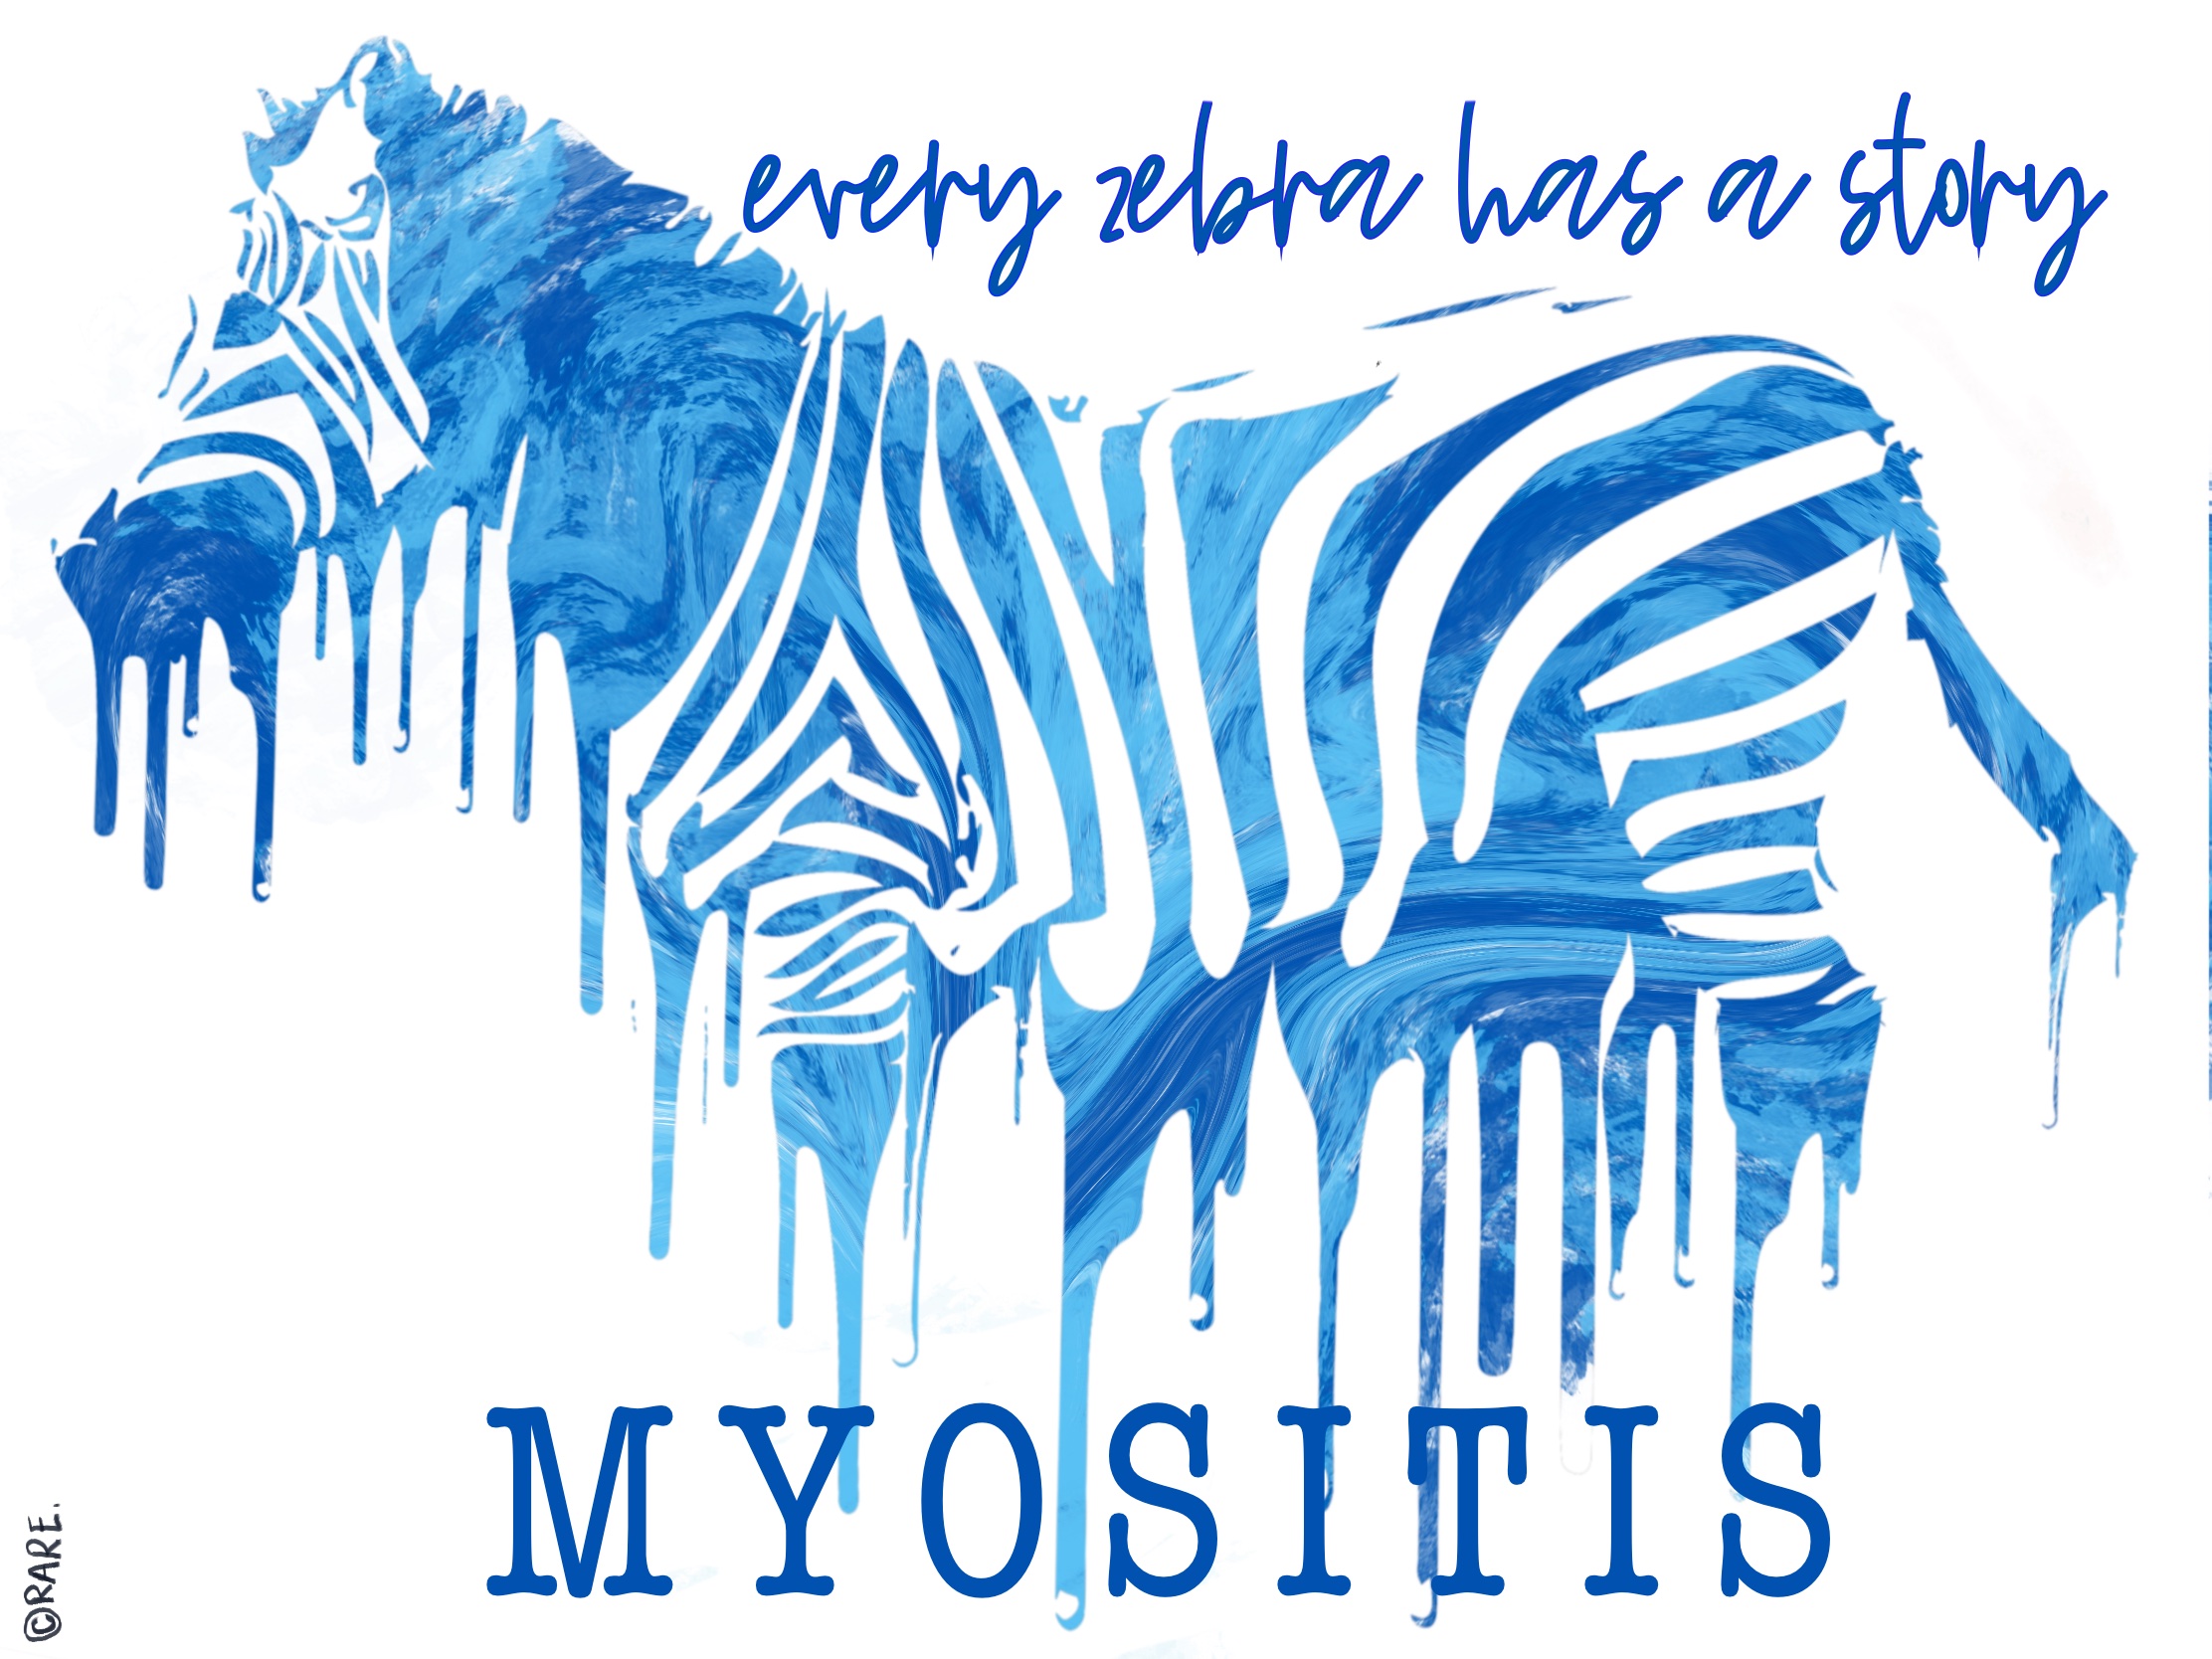 Myositis is RARE